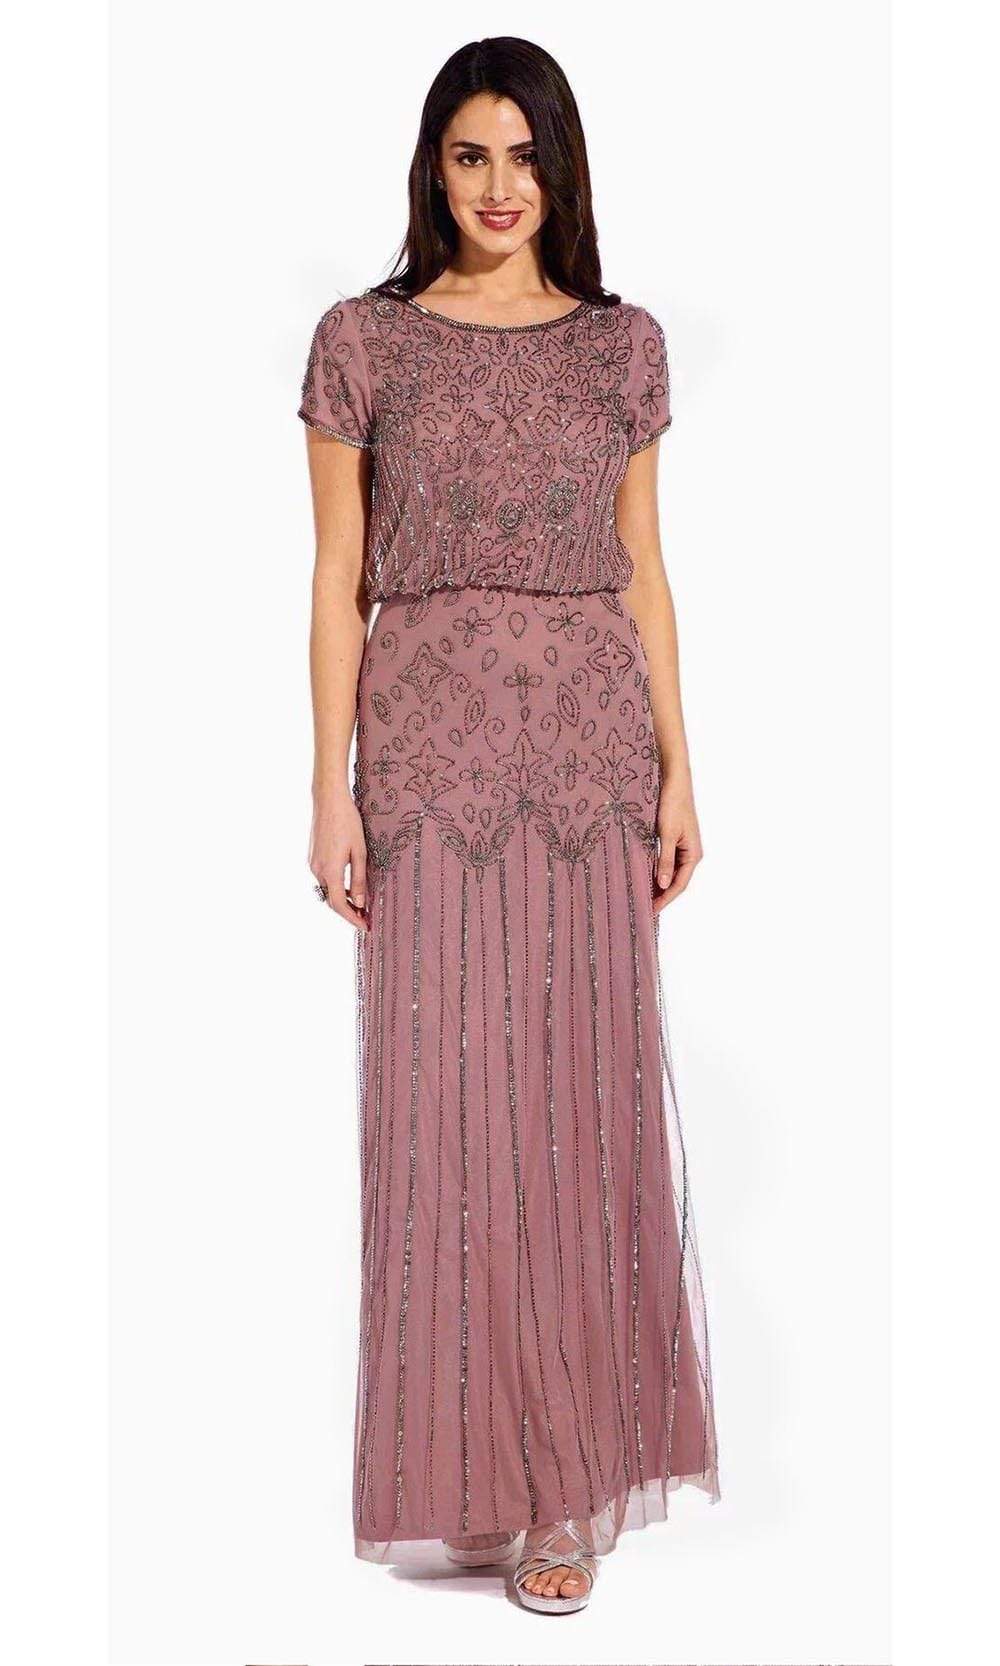 Adrianna Papell - 191906600 Embellished Mesh Blouson Evening Dress
